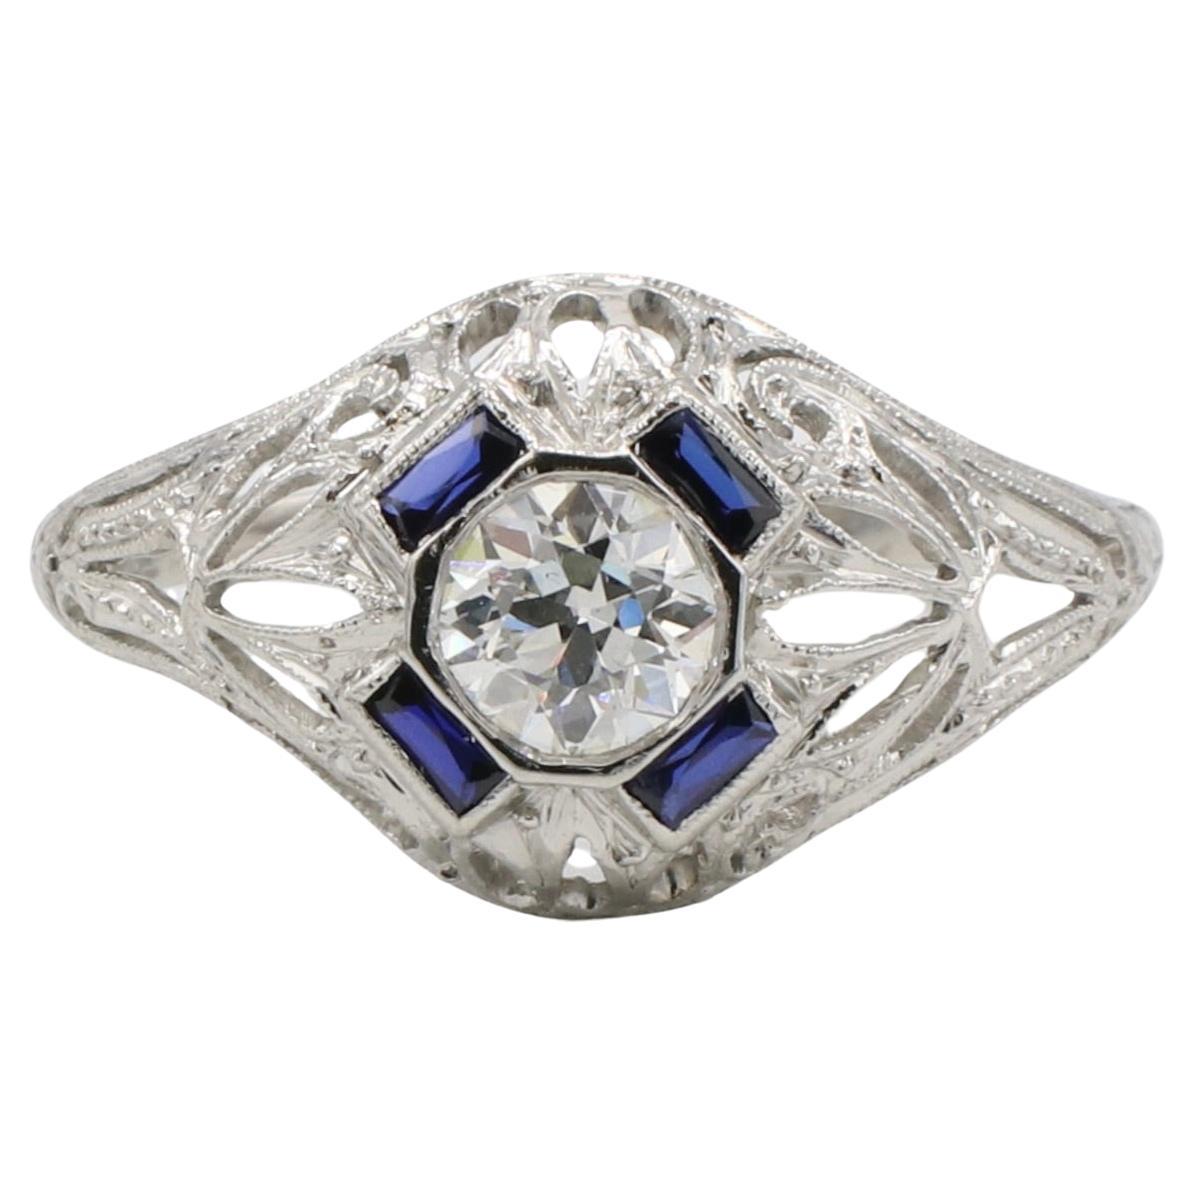 Art Deco Platinum .50 Carat Old European Cut Natural Diamond & Blue Sapphire Dome Ring 
Metal: Platinum
Weight: 4.18 grams
Diamonds: Approx. .50 carat H SI1 Old European Cut natural diamond
Sapphires: Synthetic blue sapphires 
Top: 16.5 x